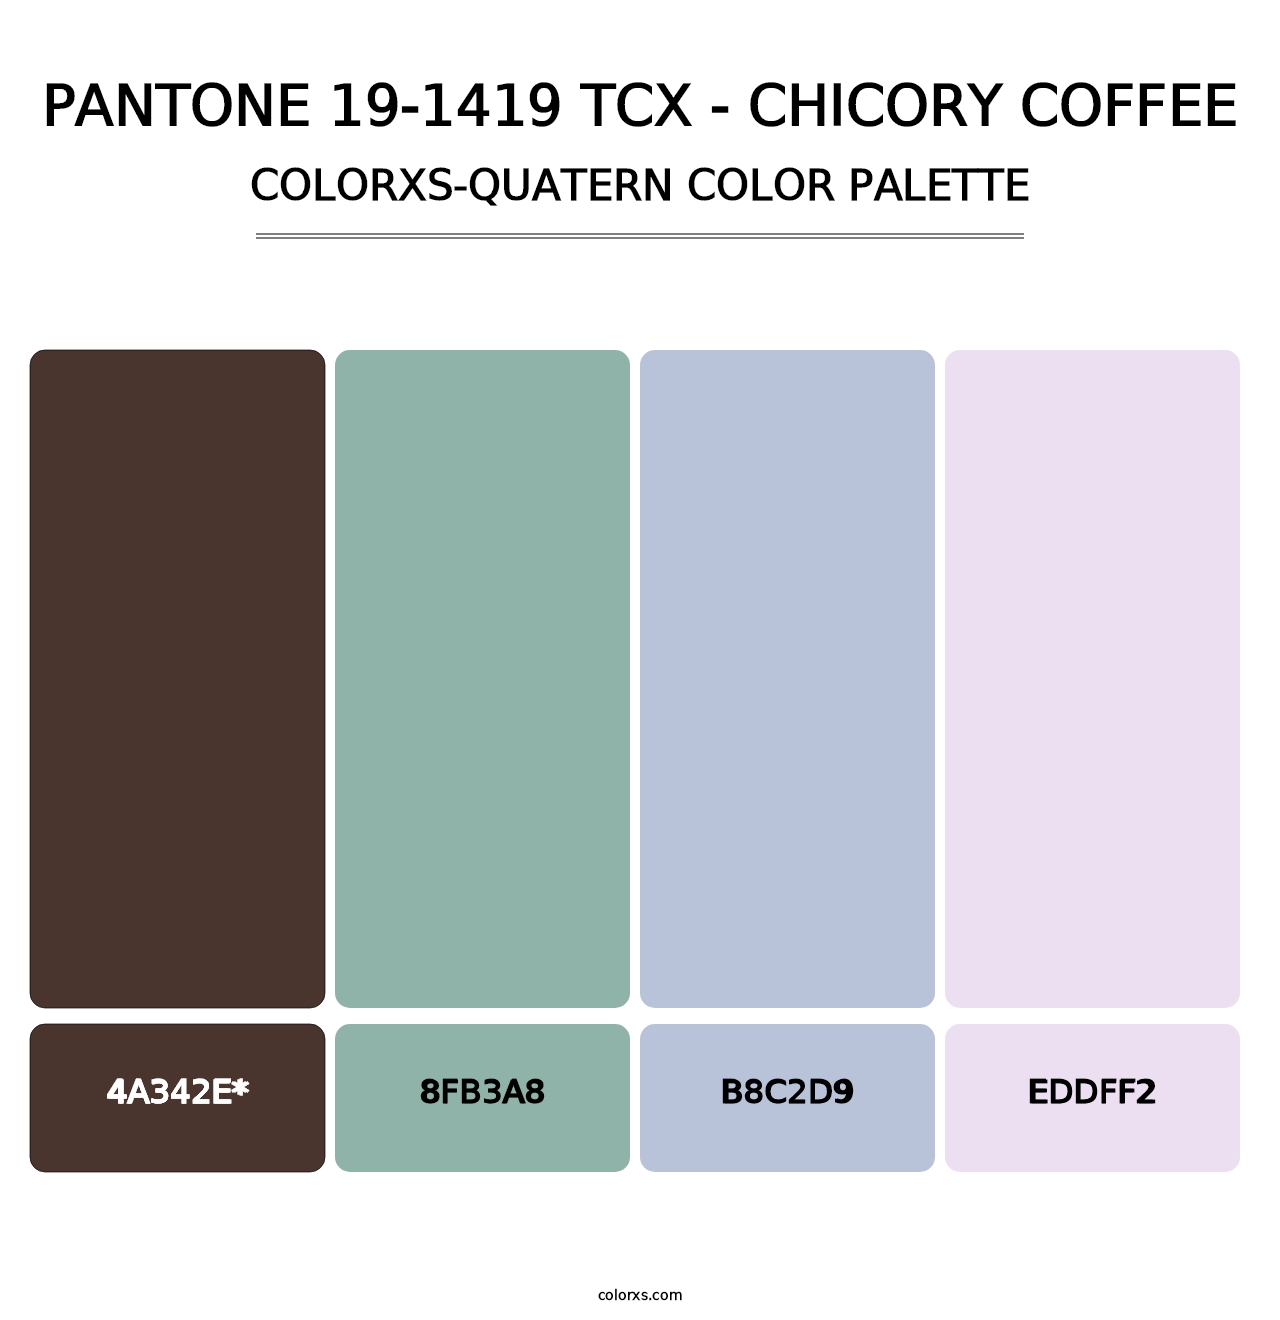 PANTONE 19-1419 TCX - Chicory Coffee - Colorxs Quatern Palette